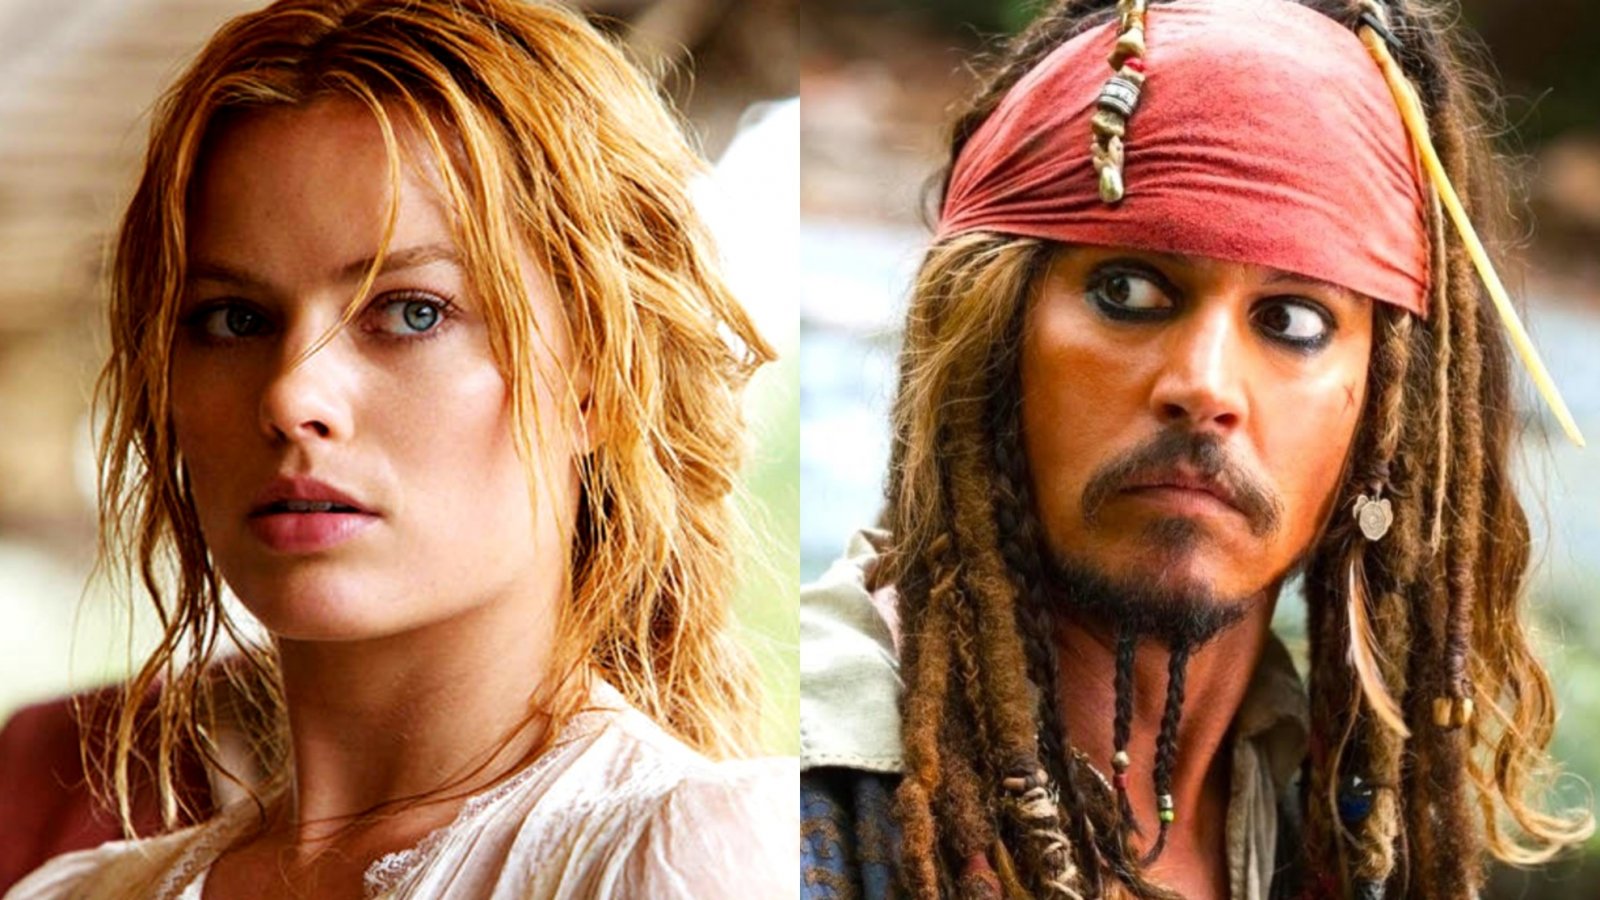 Pirati dei Caraibi, lo spin-off al femminile con Margot Robbie naviga in pessime acque